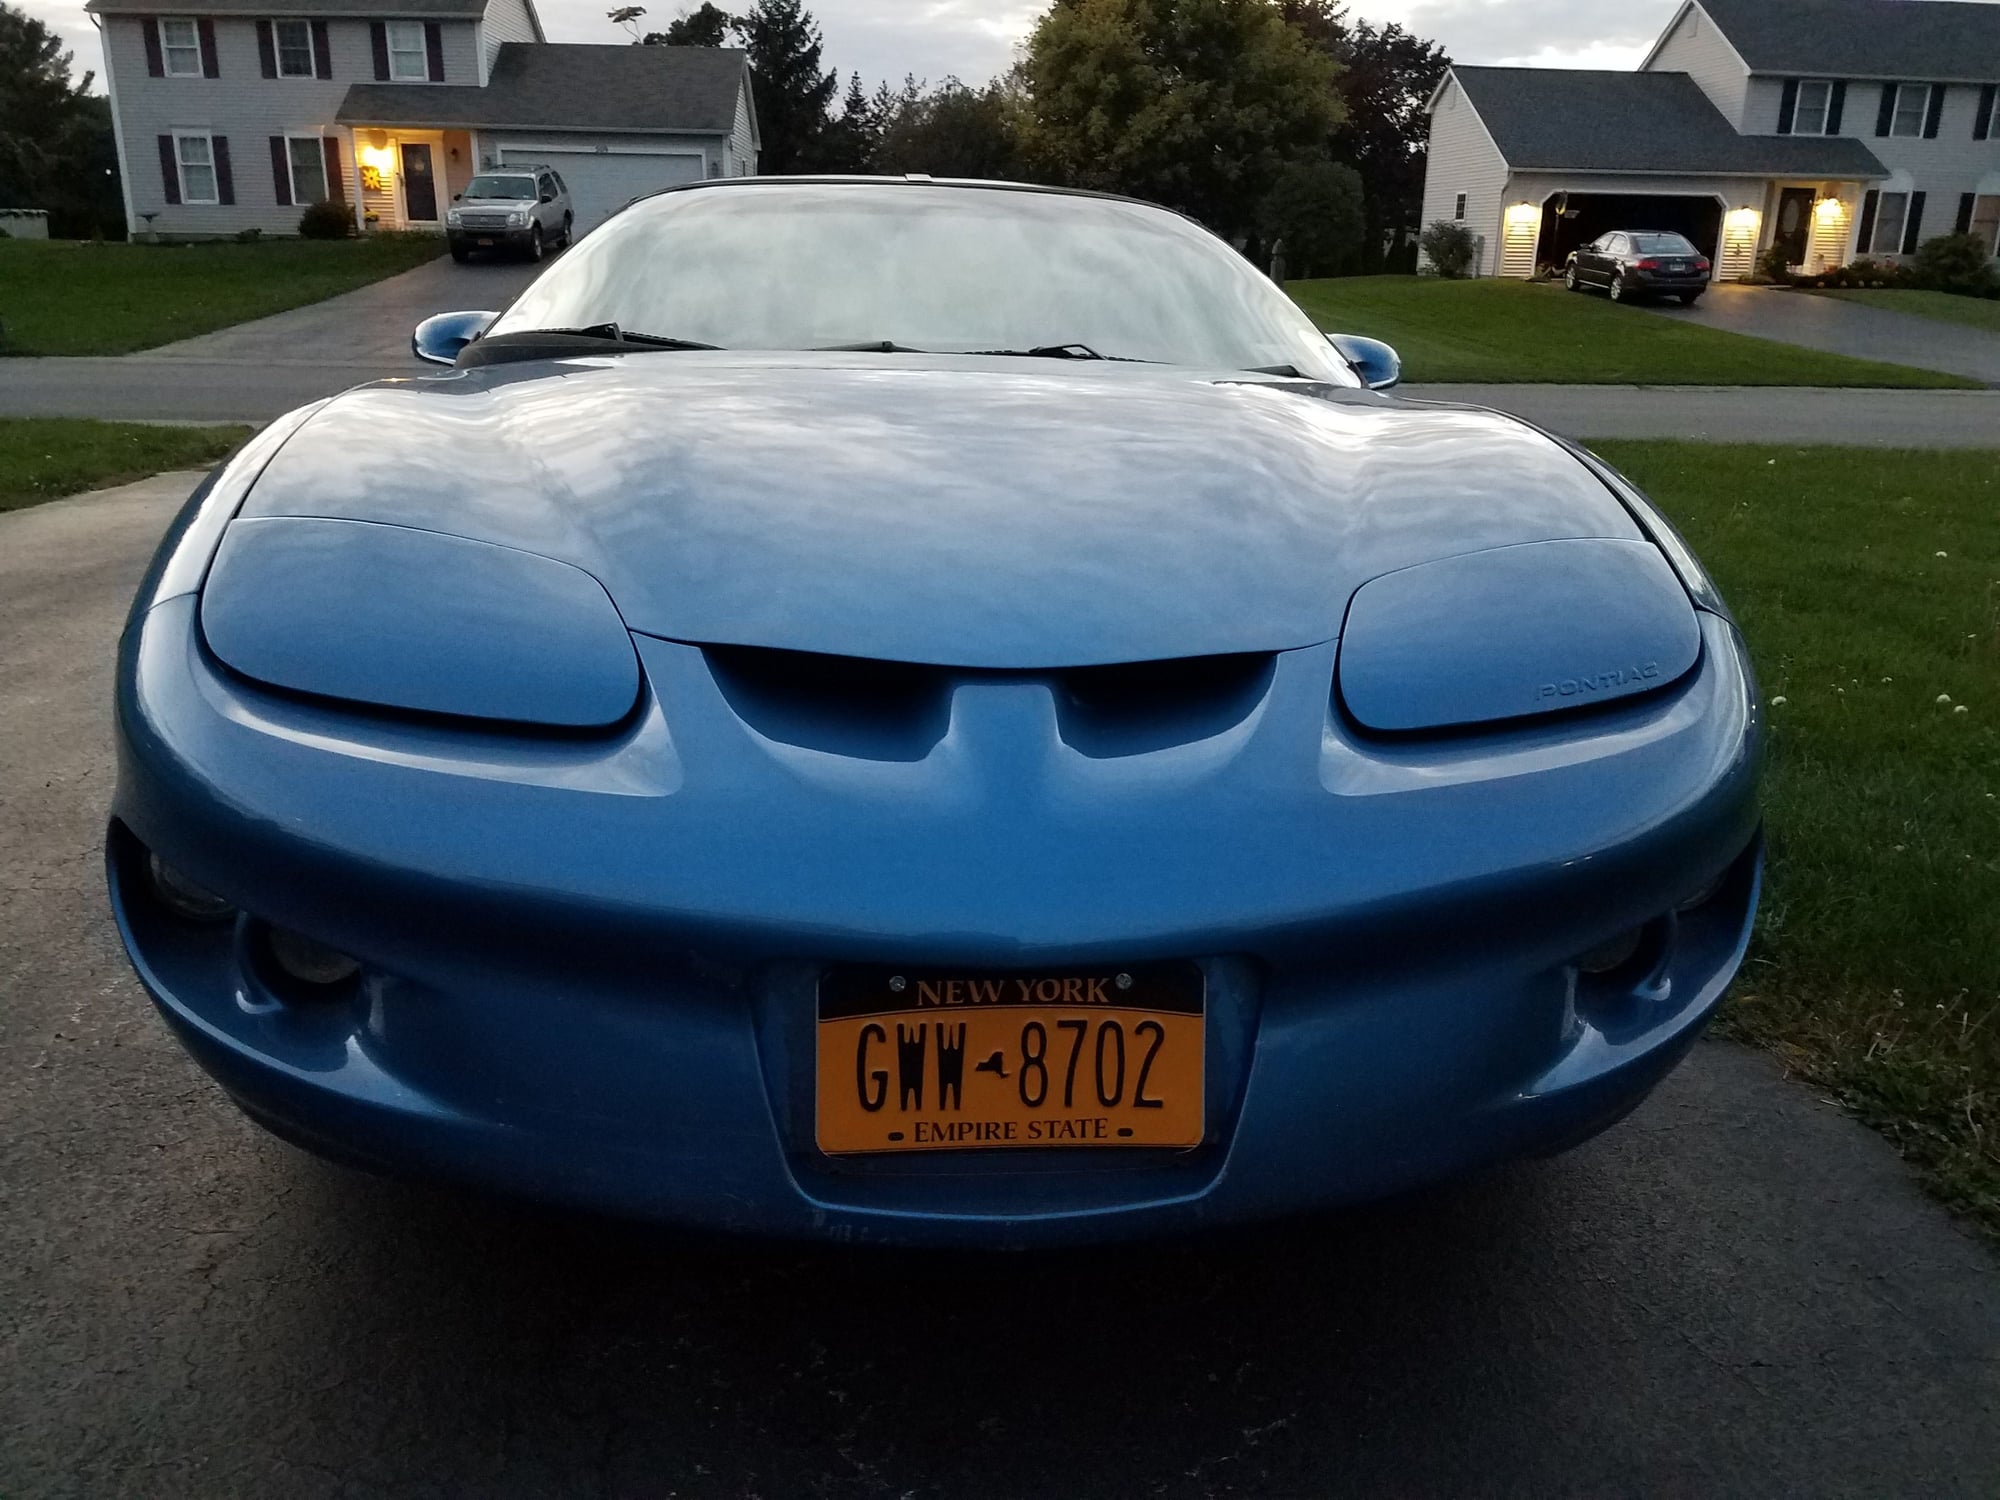 1999 Pontiac Firebird - 1999 Firebird Formula MBM - Used - VIN 2g2fv22g1x2212985 - 180,000 Miles - 8 cyl - 2WD - Automatic - Coupe - Blue - Rochester, NY 14580, United States